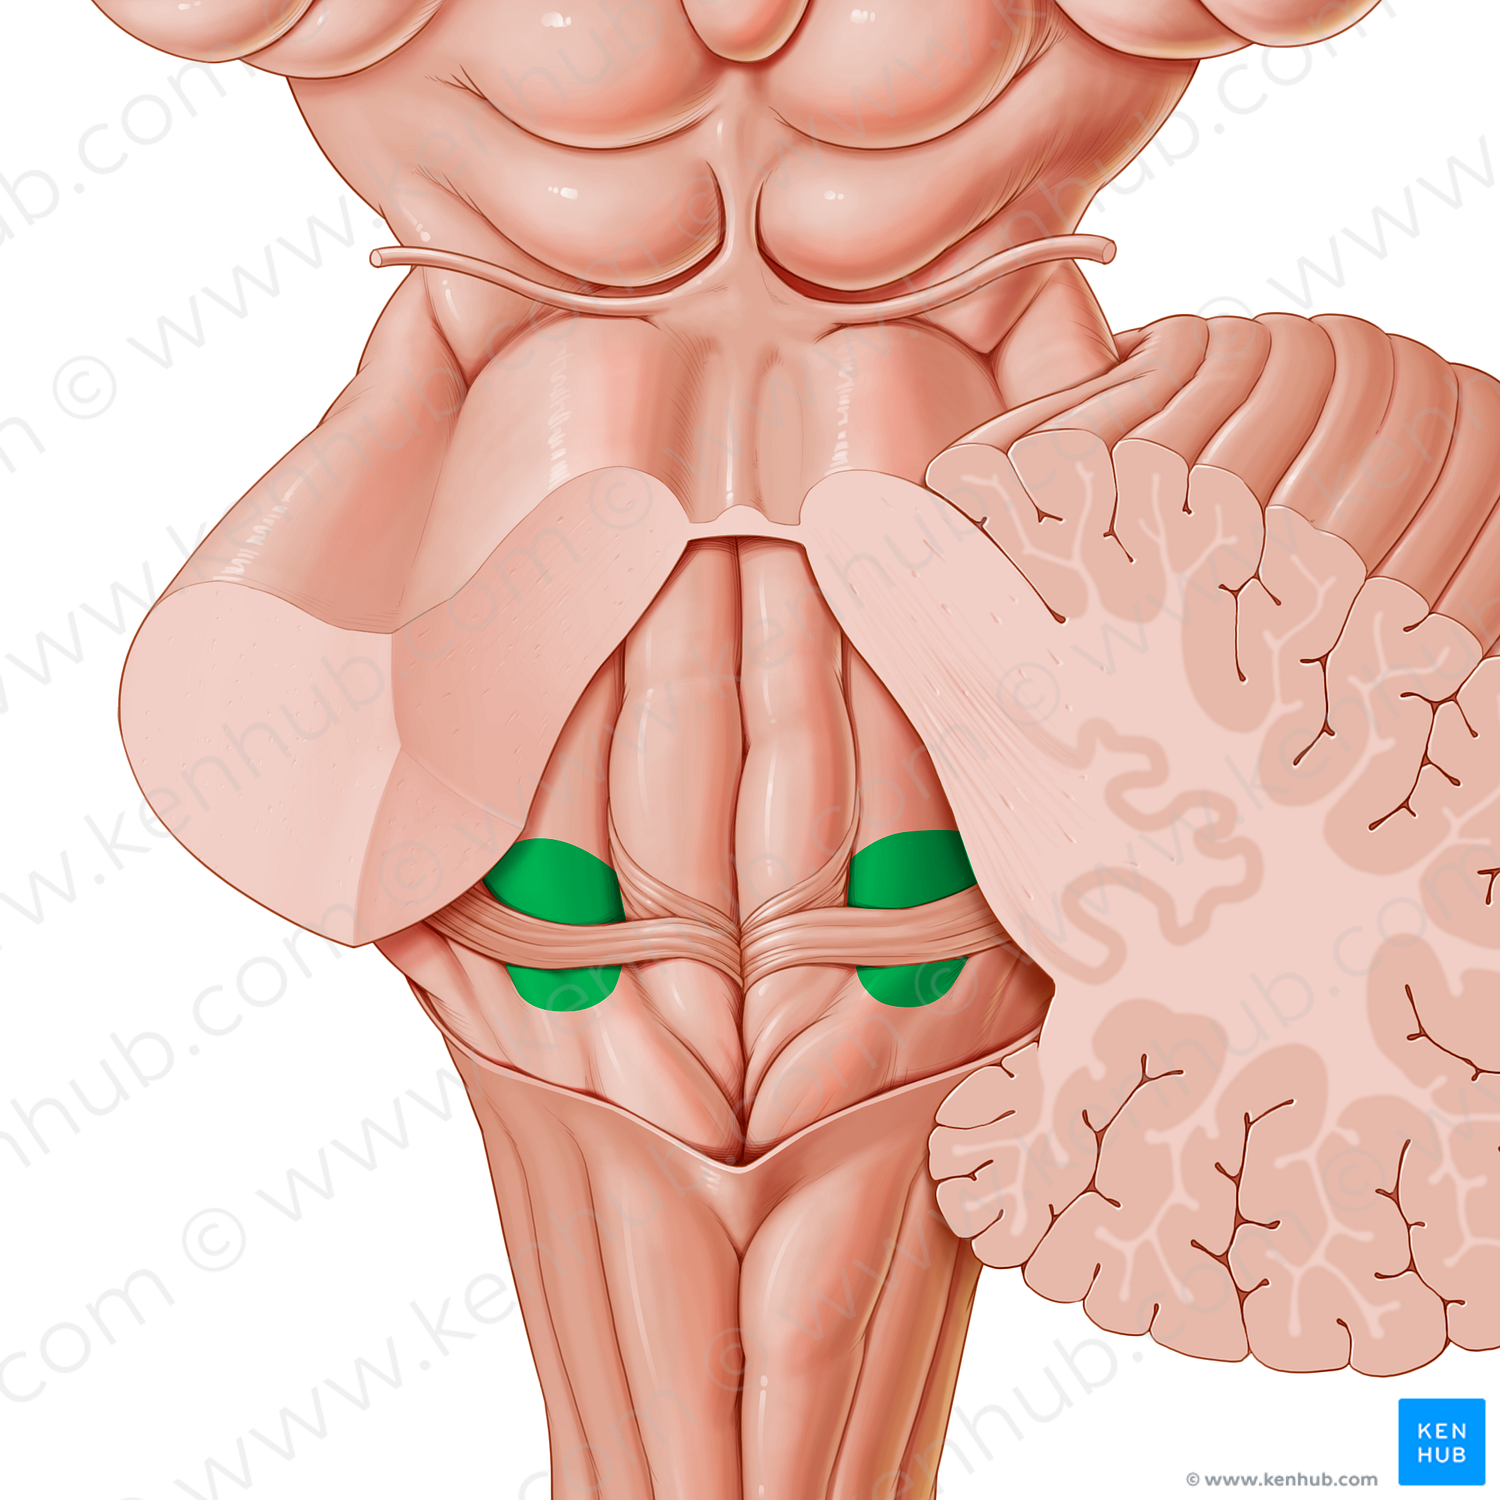 Vestibular area of fourth ventricle (#872)